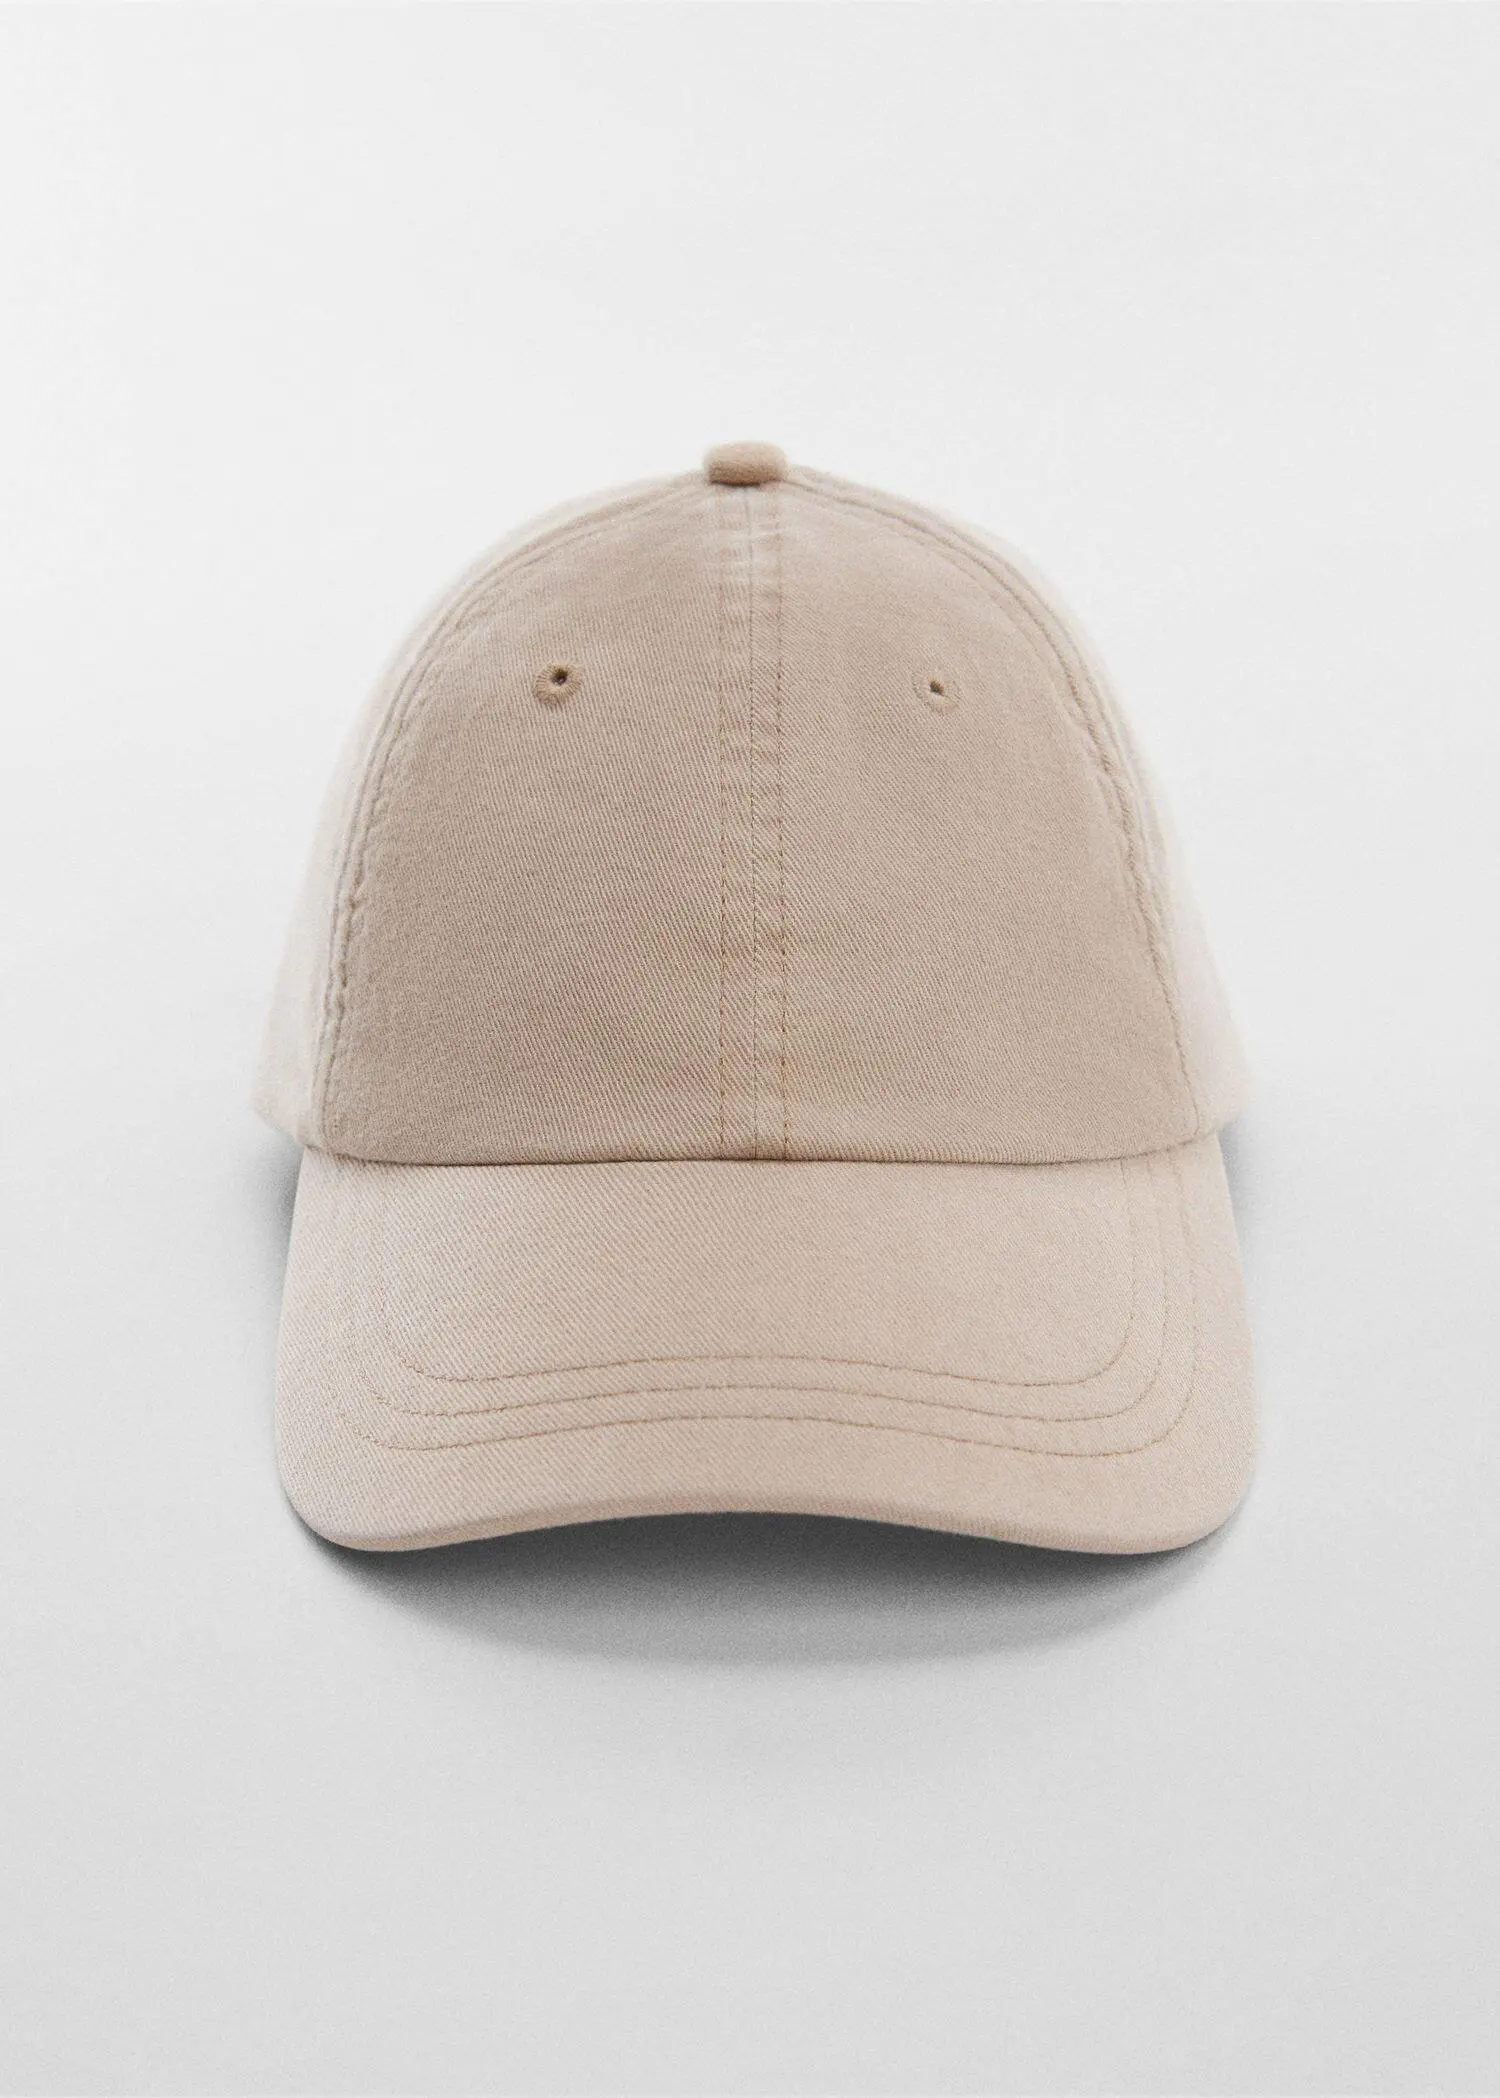 Mango Organic cotton cap. a beige baseball cap on a white background. 